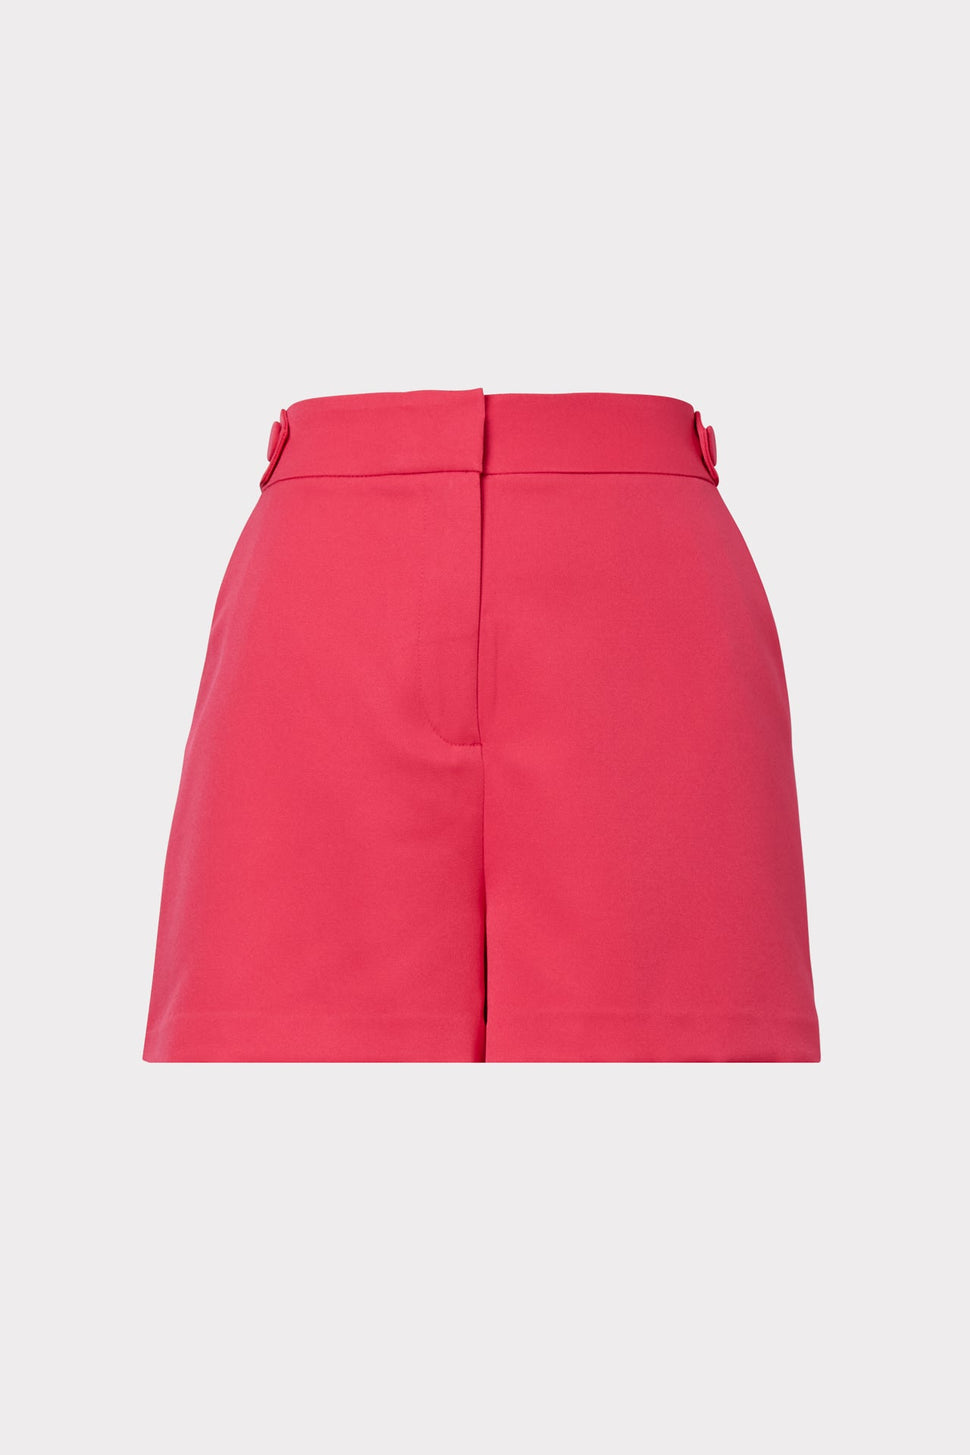 Women's Button Pink Shorts